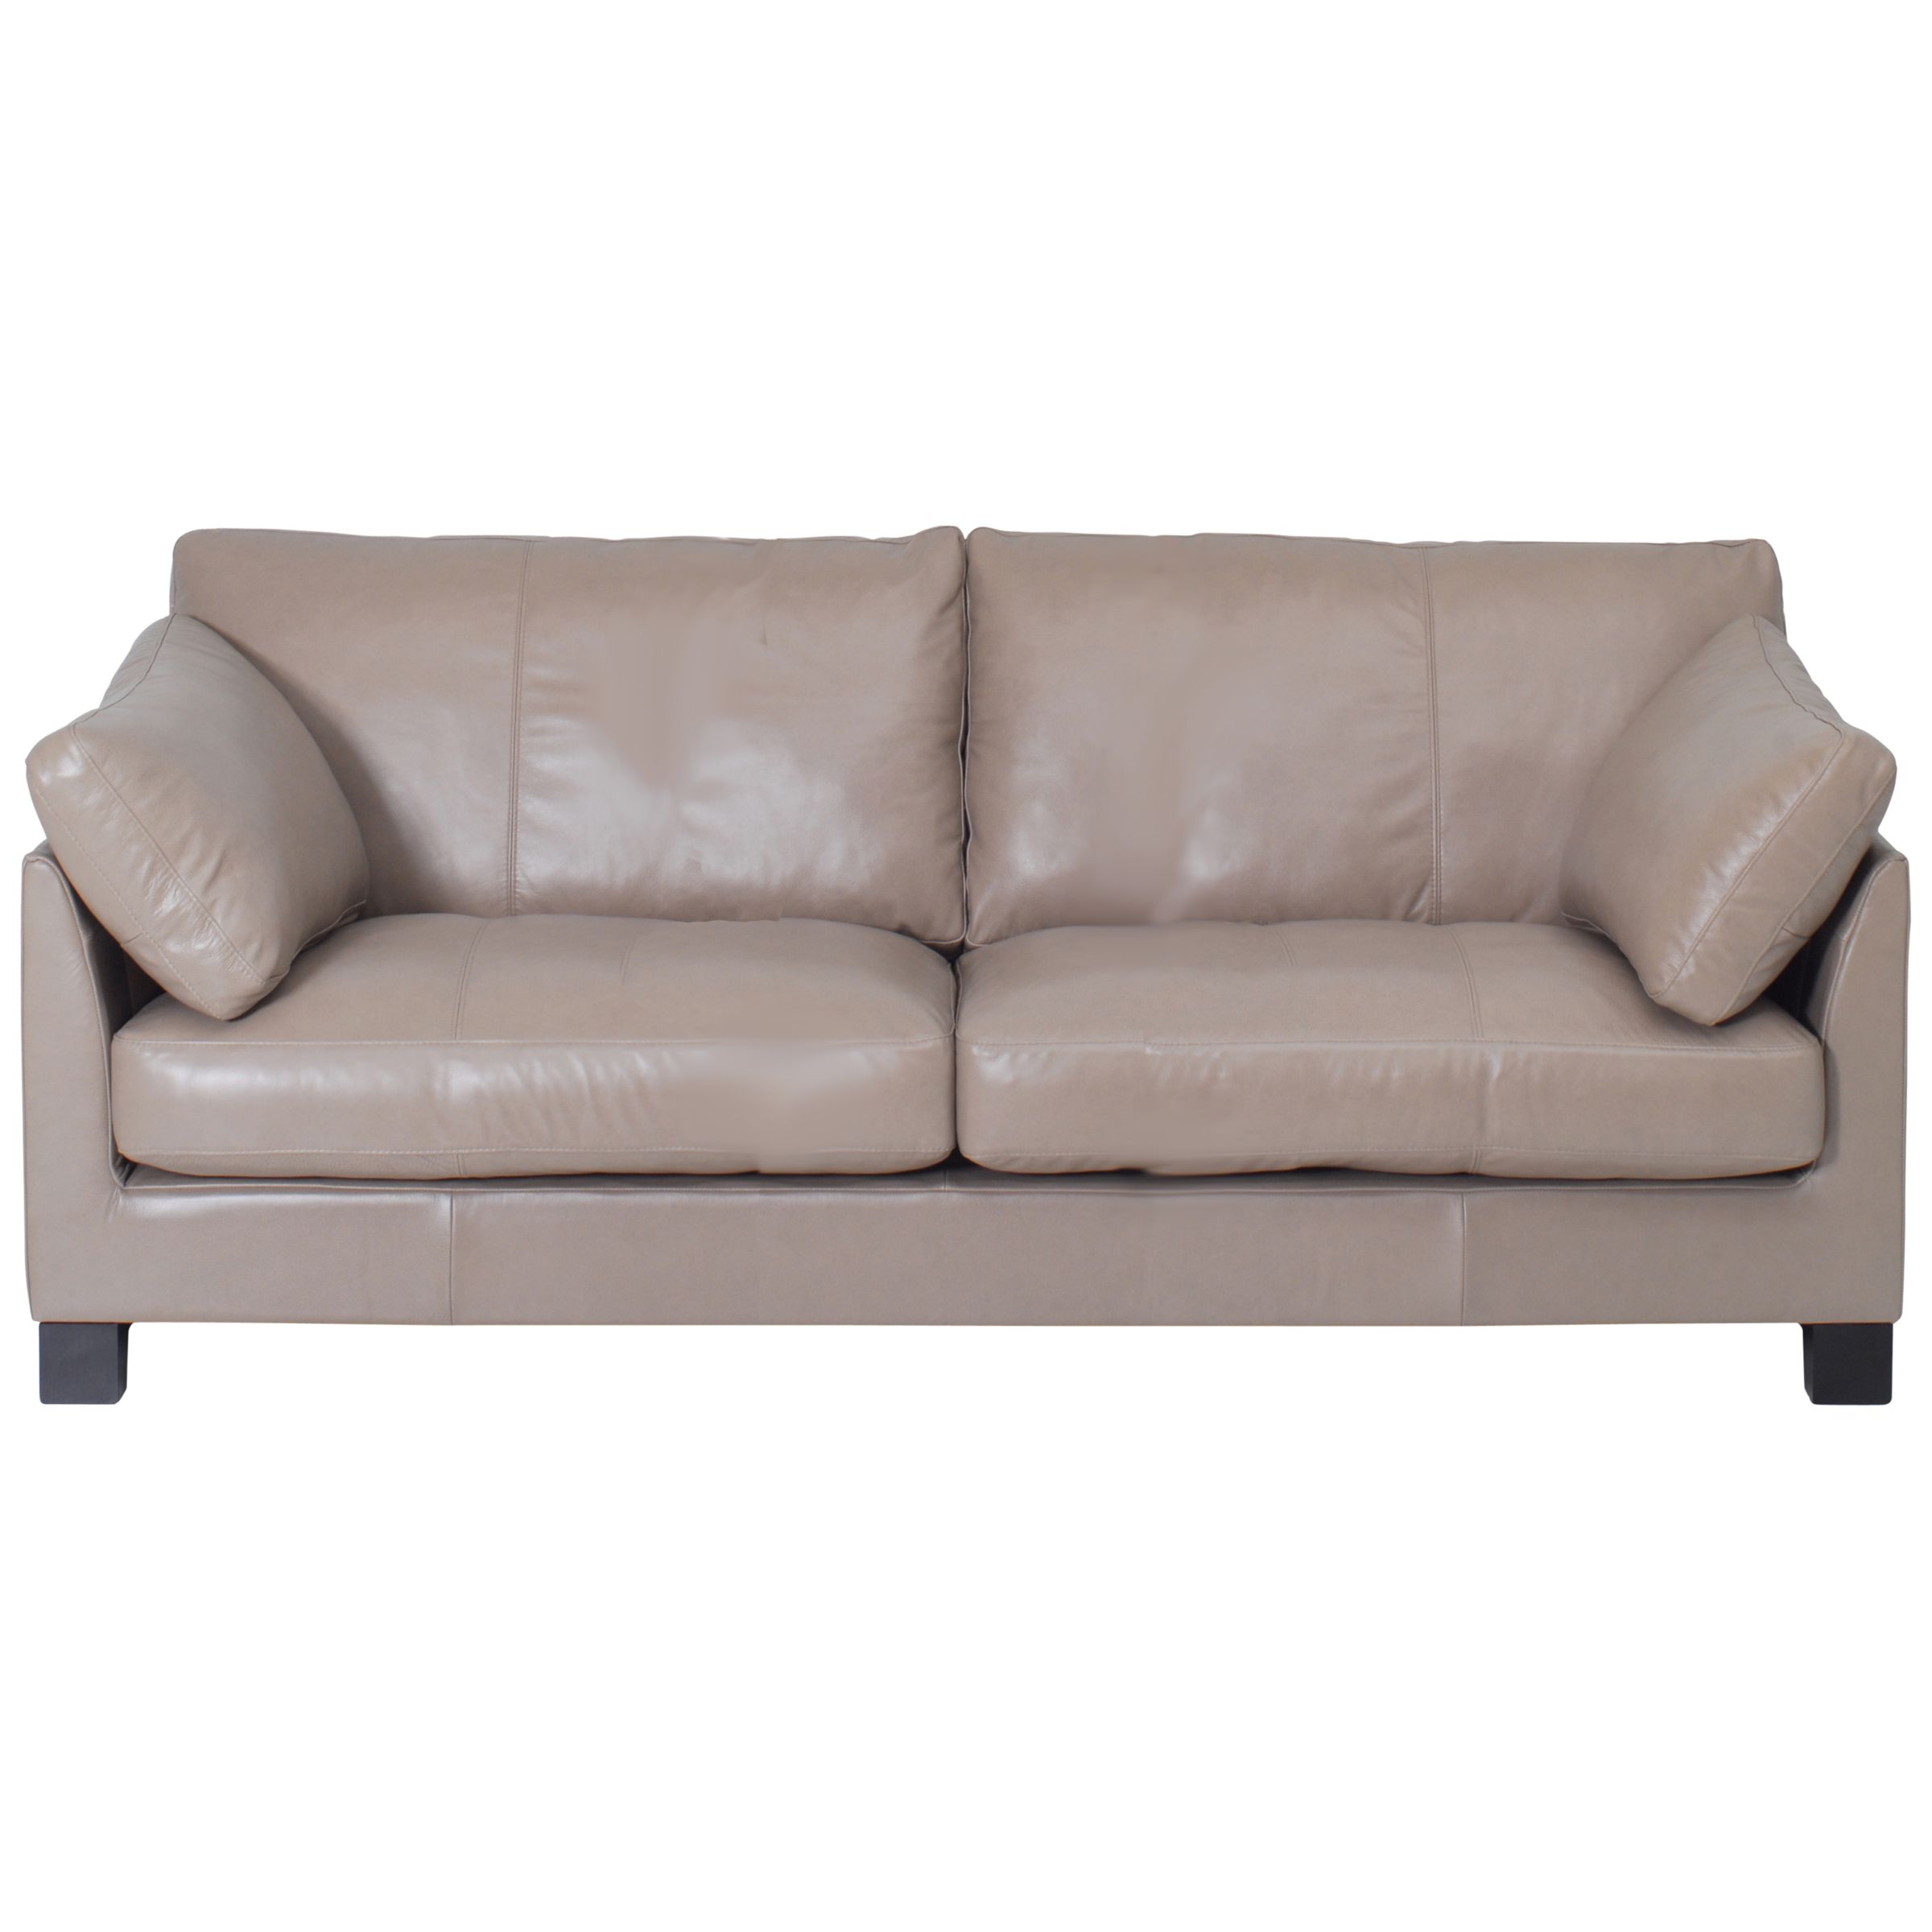 John Lewis Ikon Grand Sofa, Oxford Leather, Mushroom, width 212cm